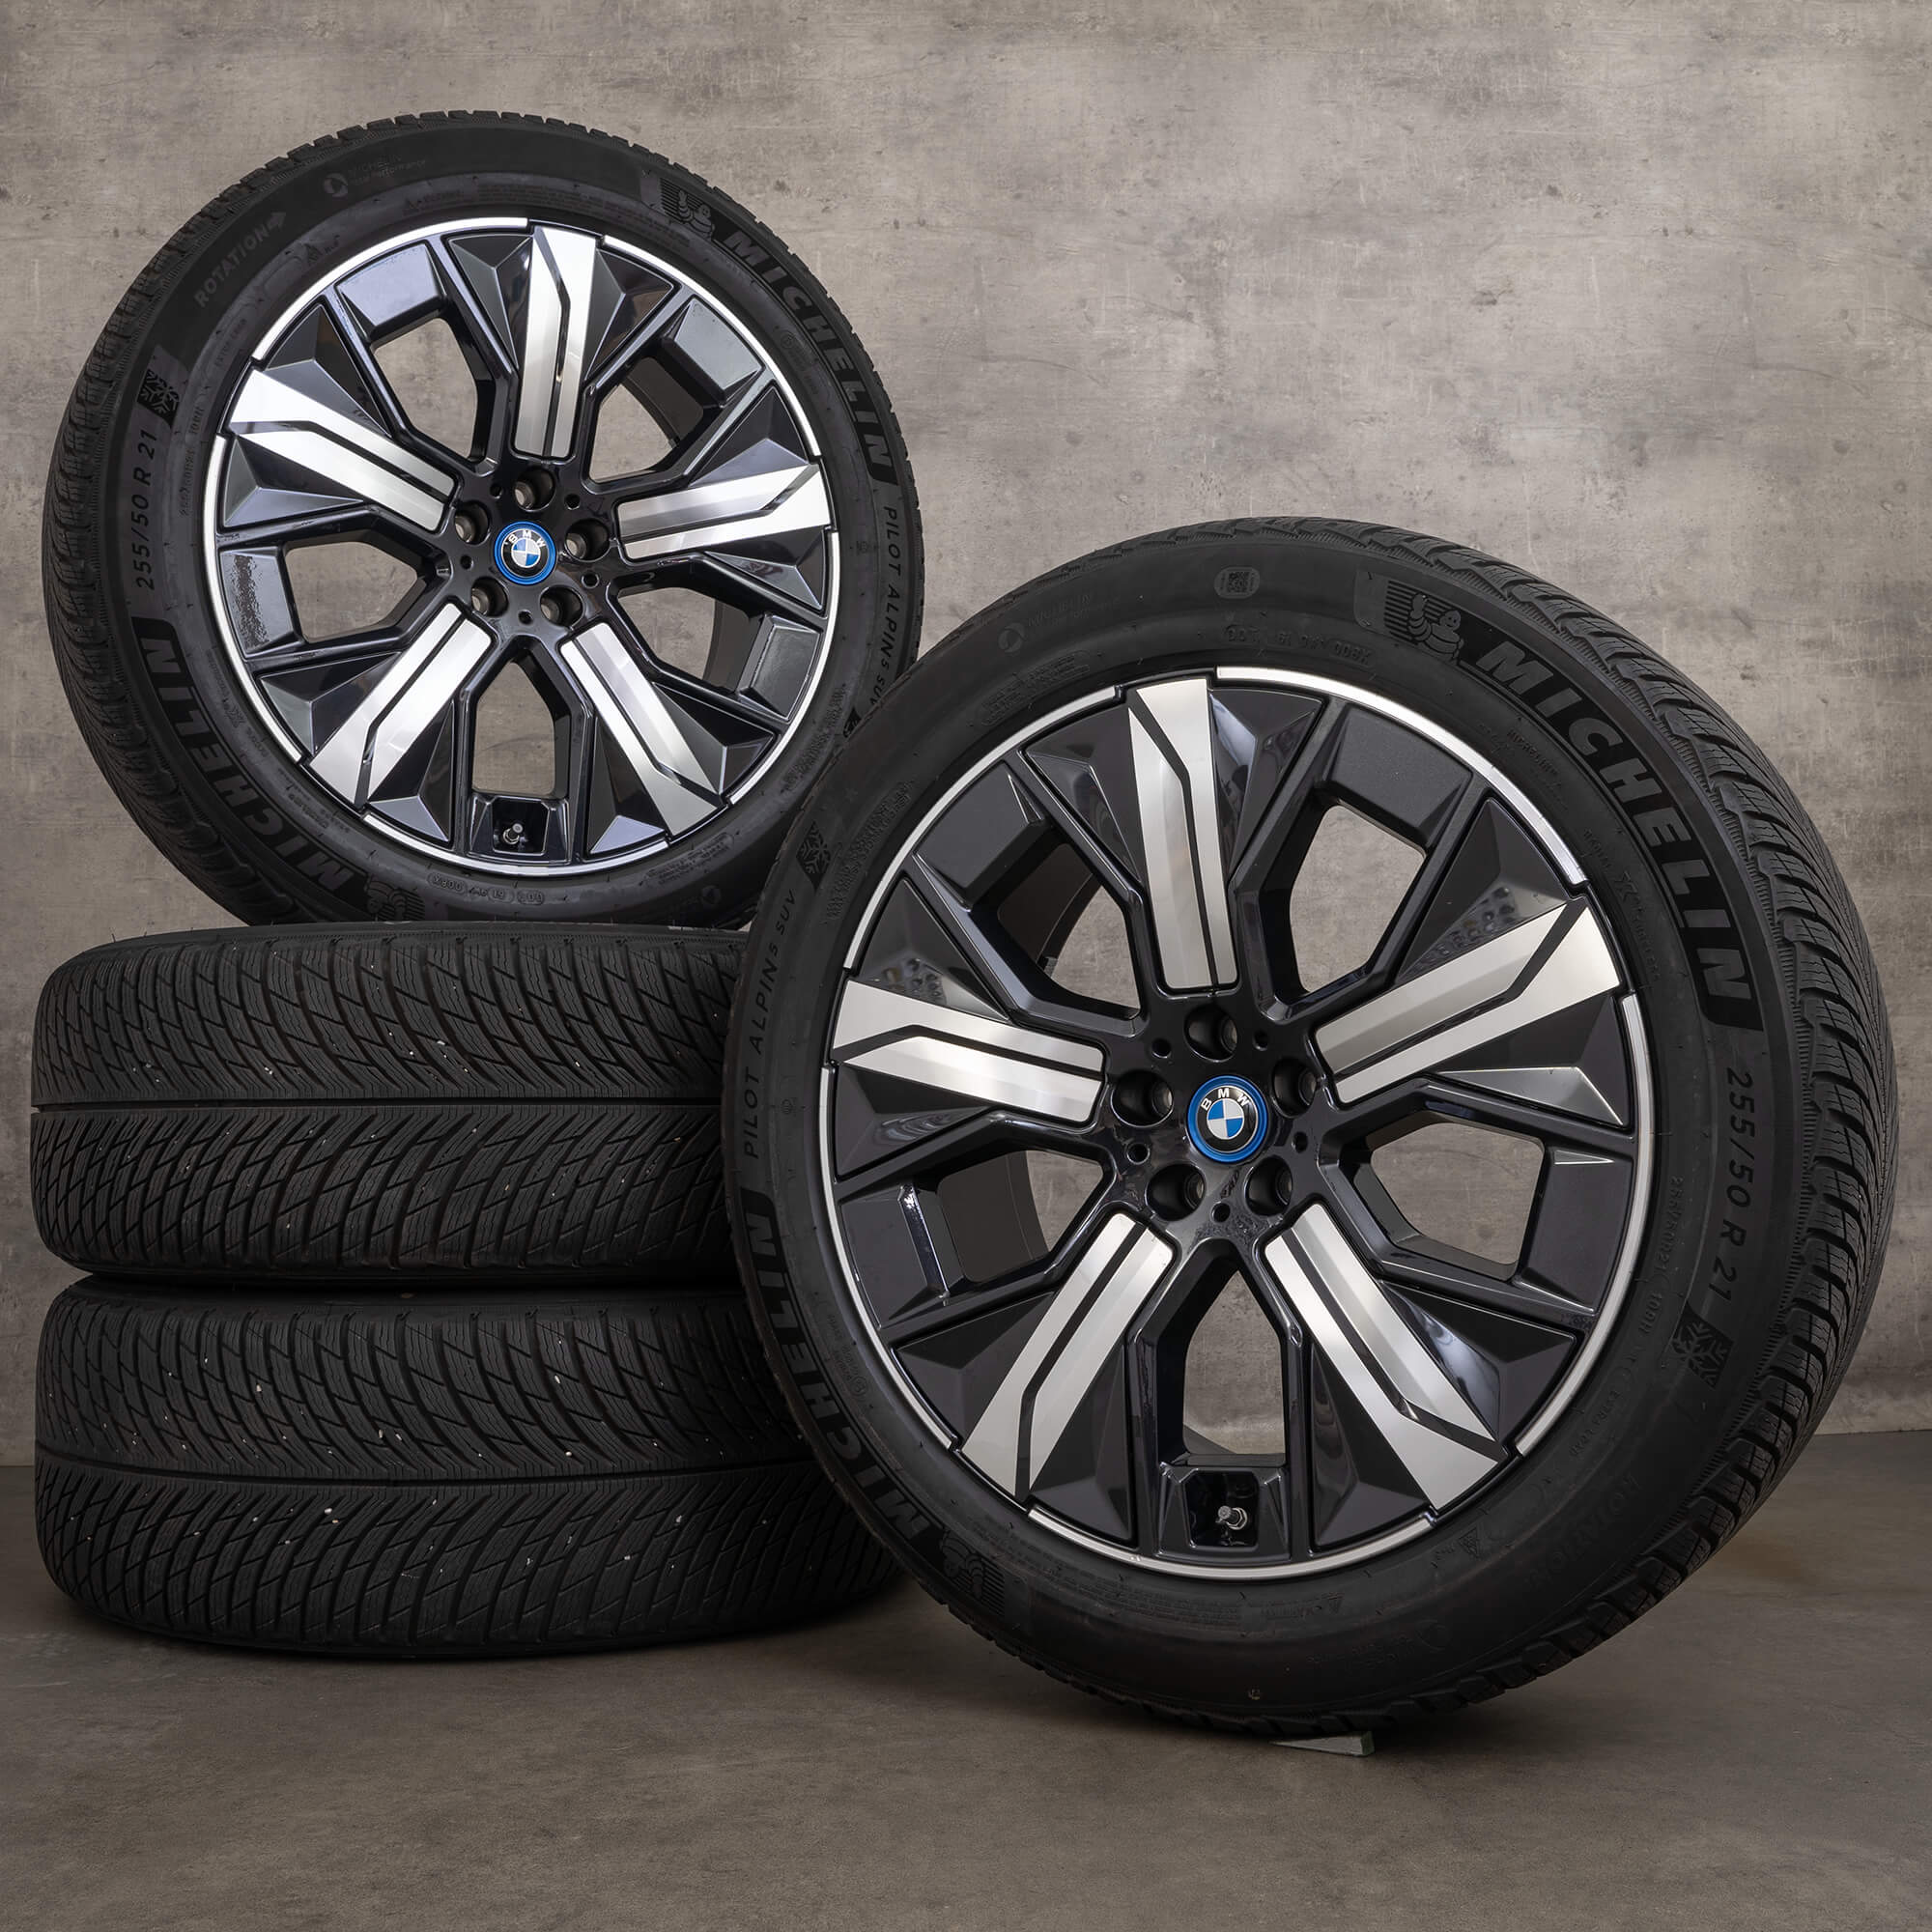 OEM BMW iX i20 21 inch winter tires rims 5A02655 Styling 1011 black